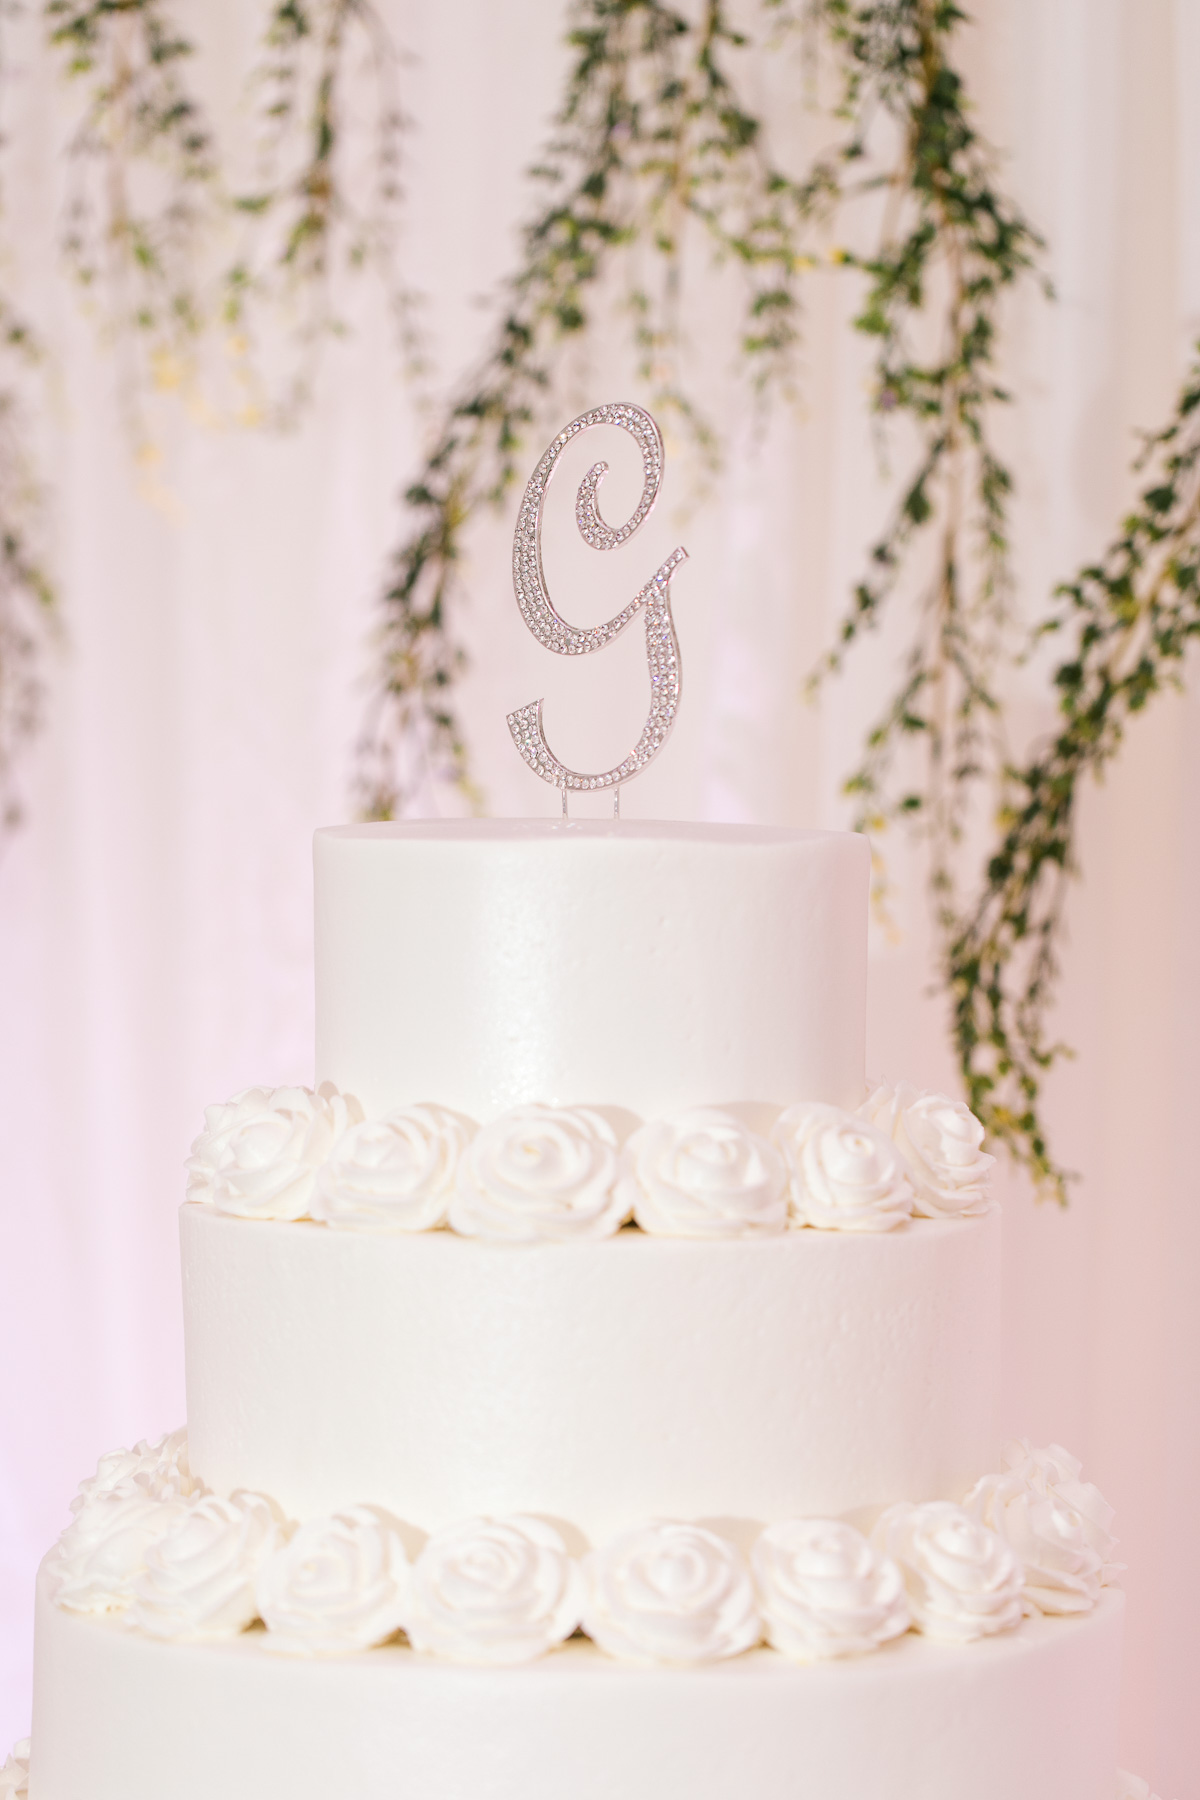 White wedding cake with custom wedding topper